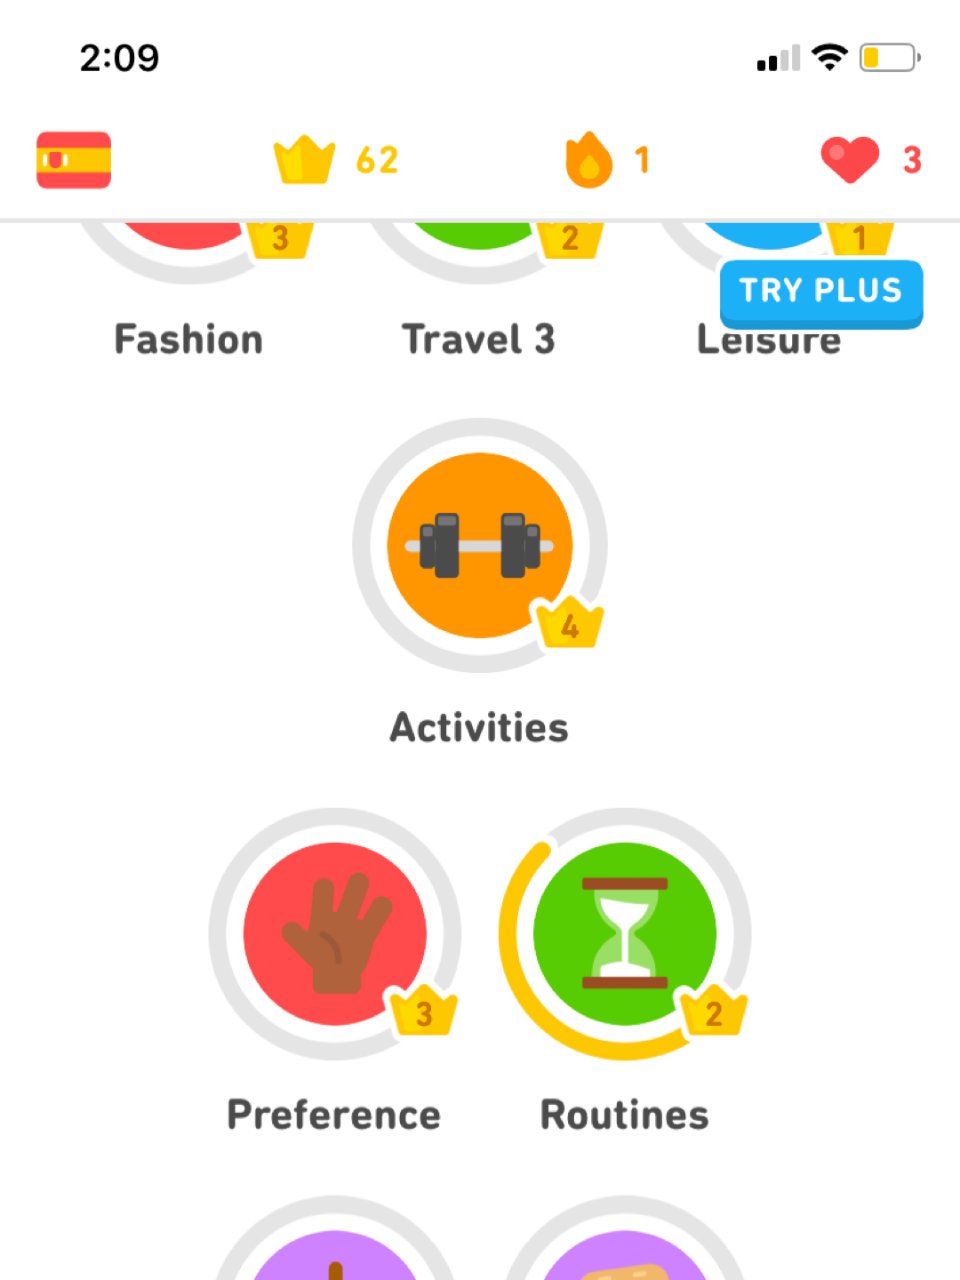 21天自律计划,Duolingo